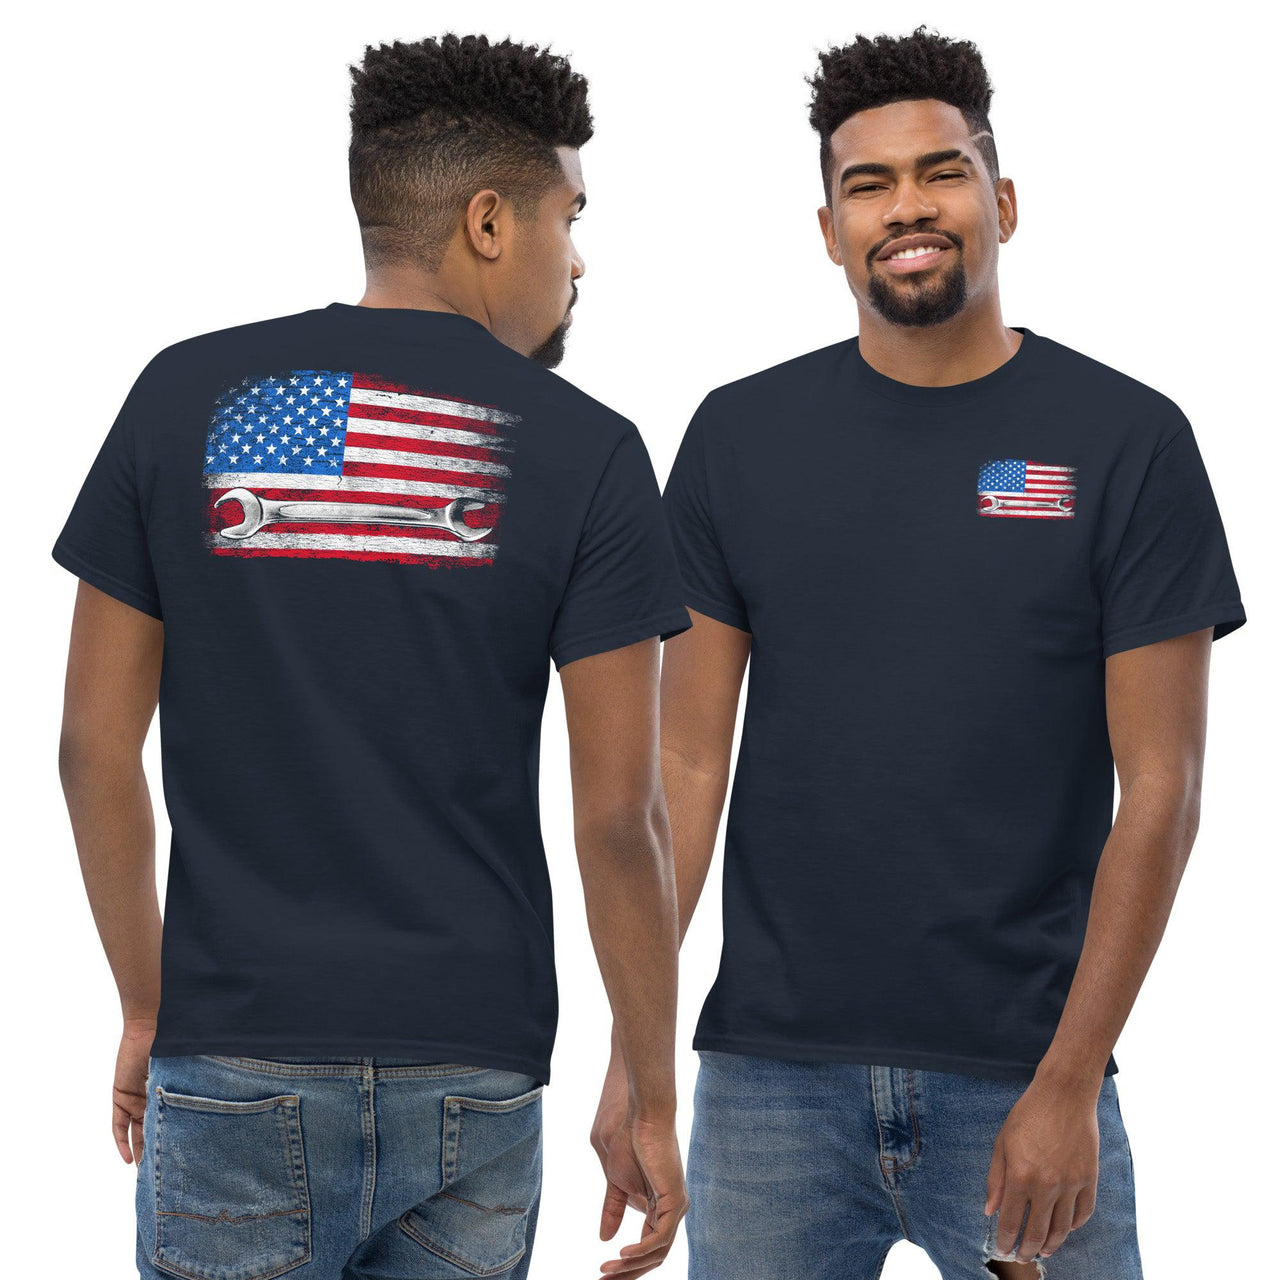 Mechanic T-Shirt American Flag Wrench Design modeled in navy